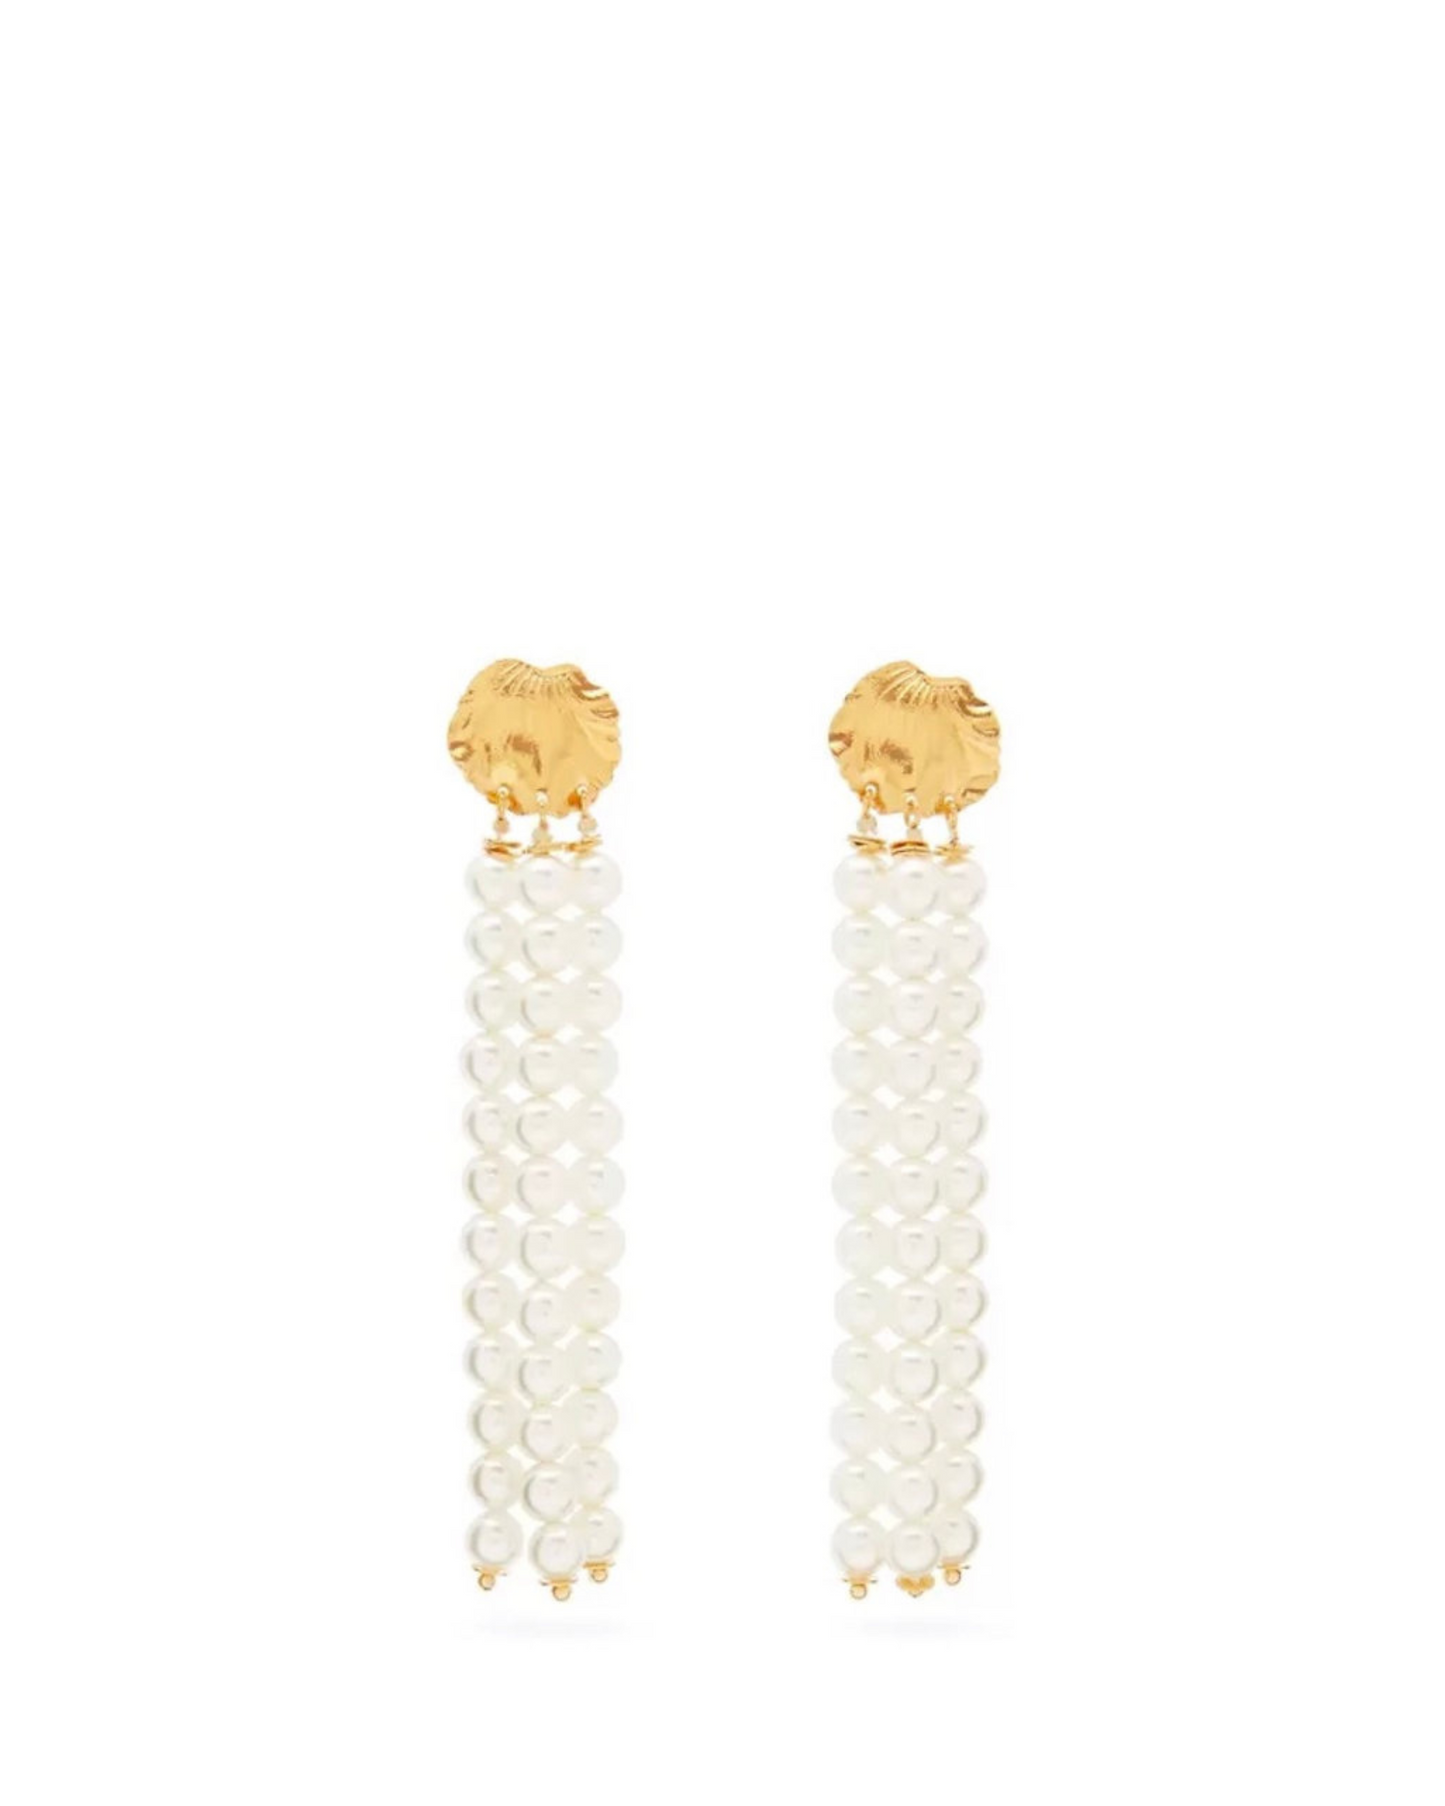 Madera earrings